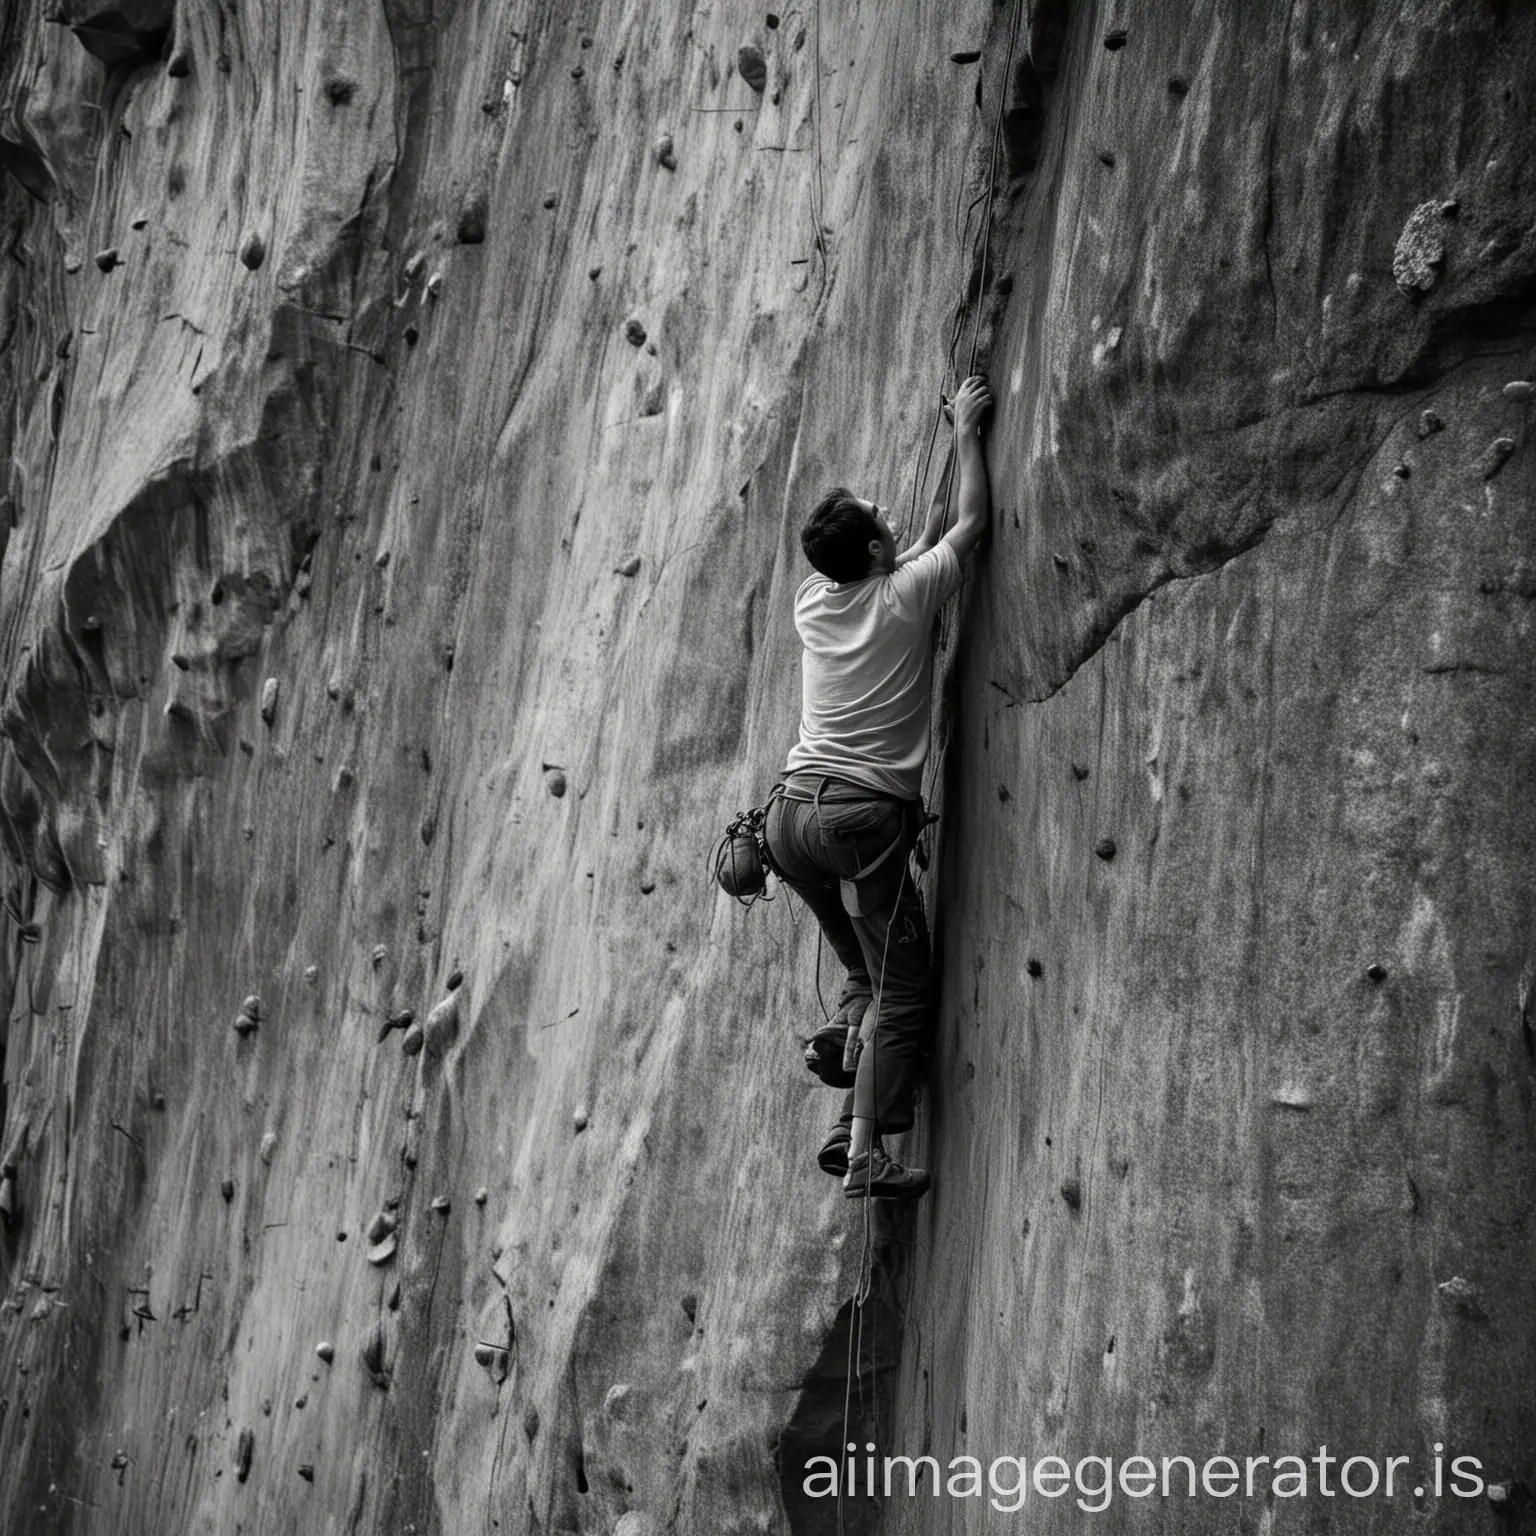 Ambitious-Climber-Ascending-in-Monochrome-Dreams